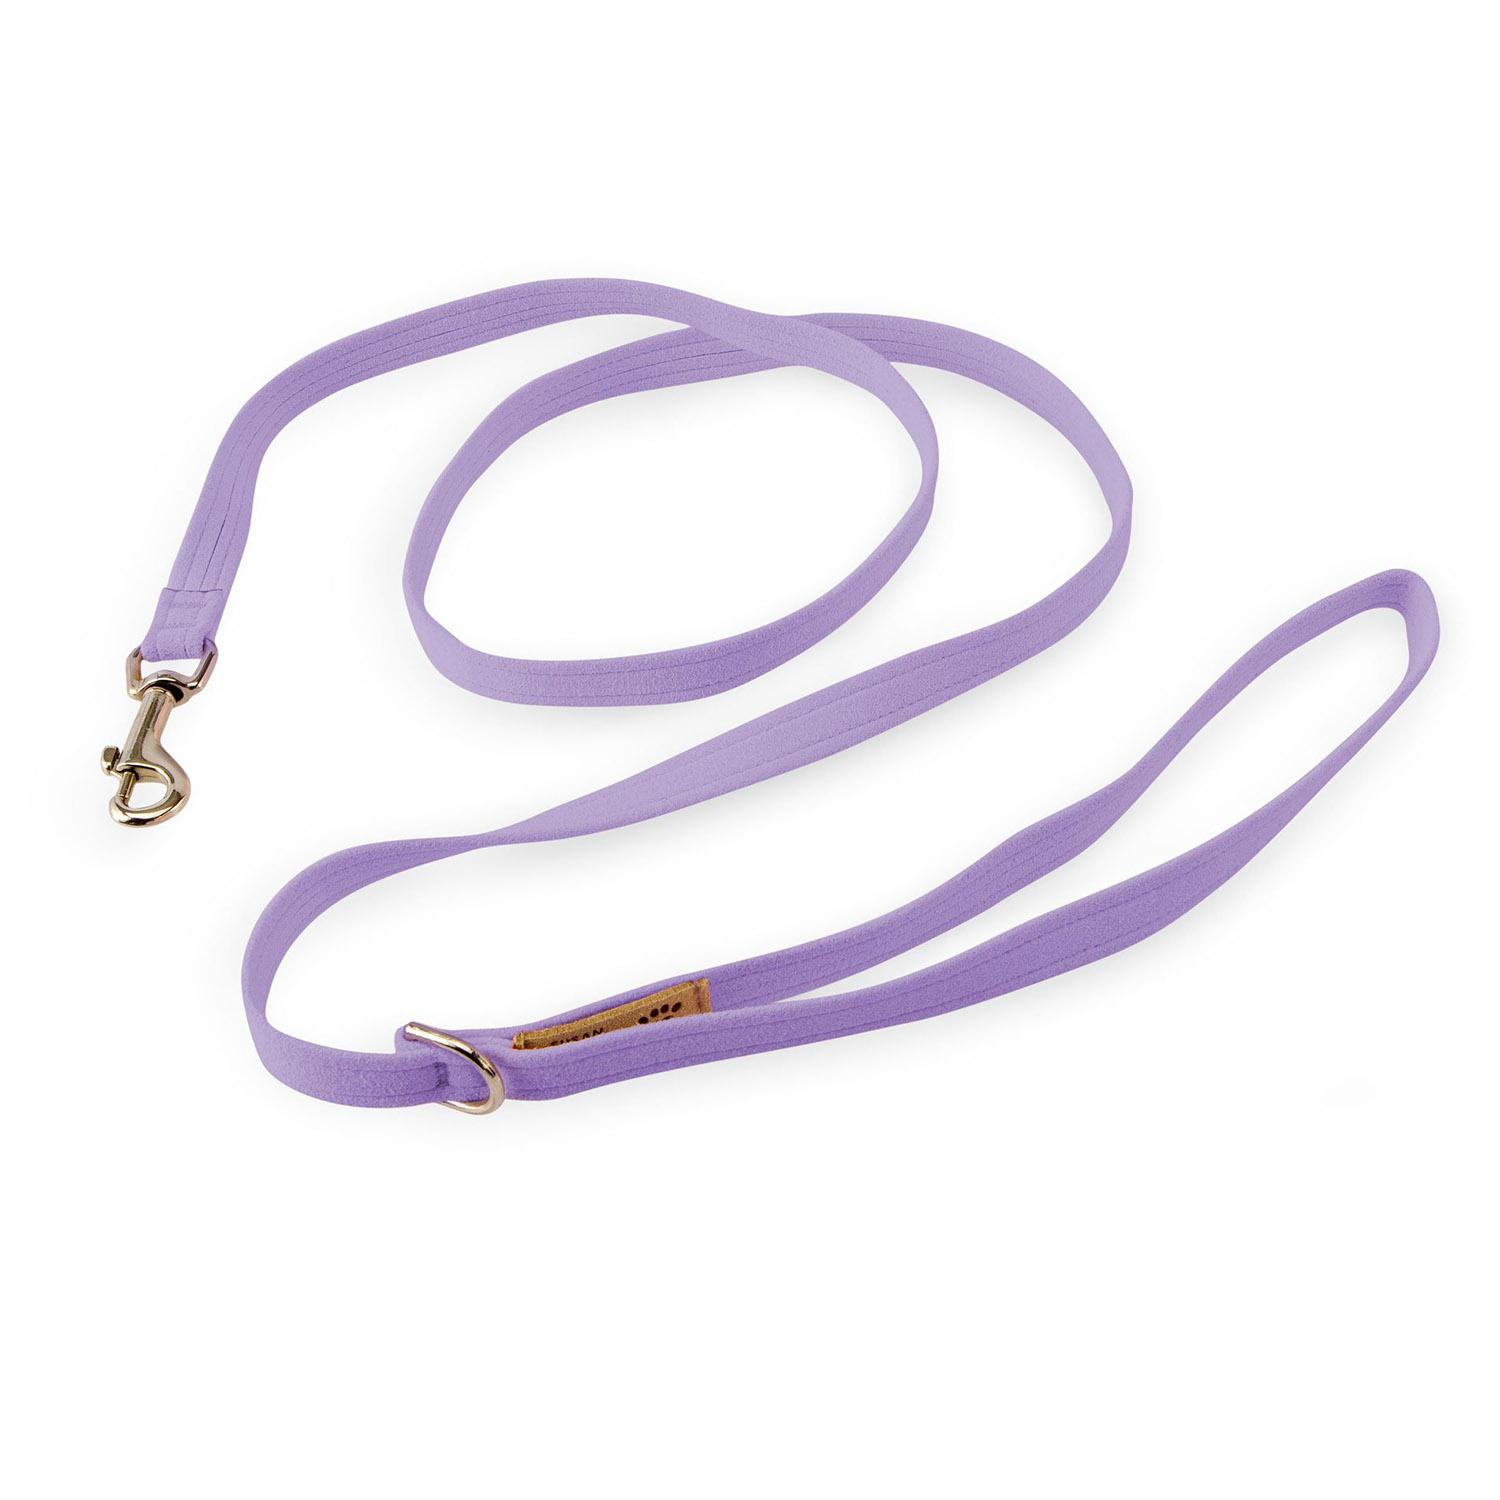 Solid Ultrasuede Dog Leash by Susan Lanci - French Lavender